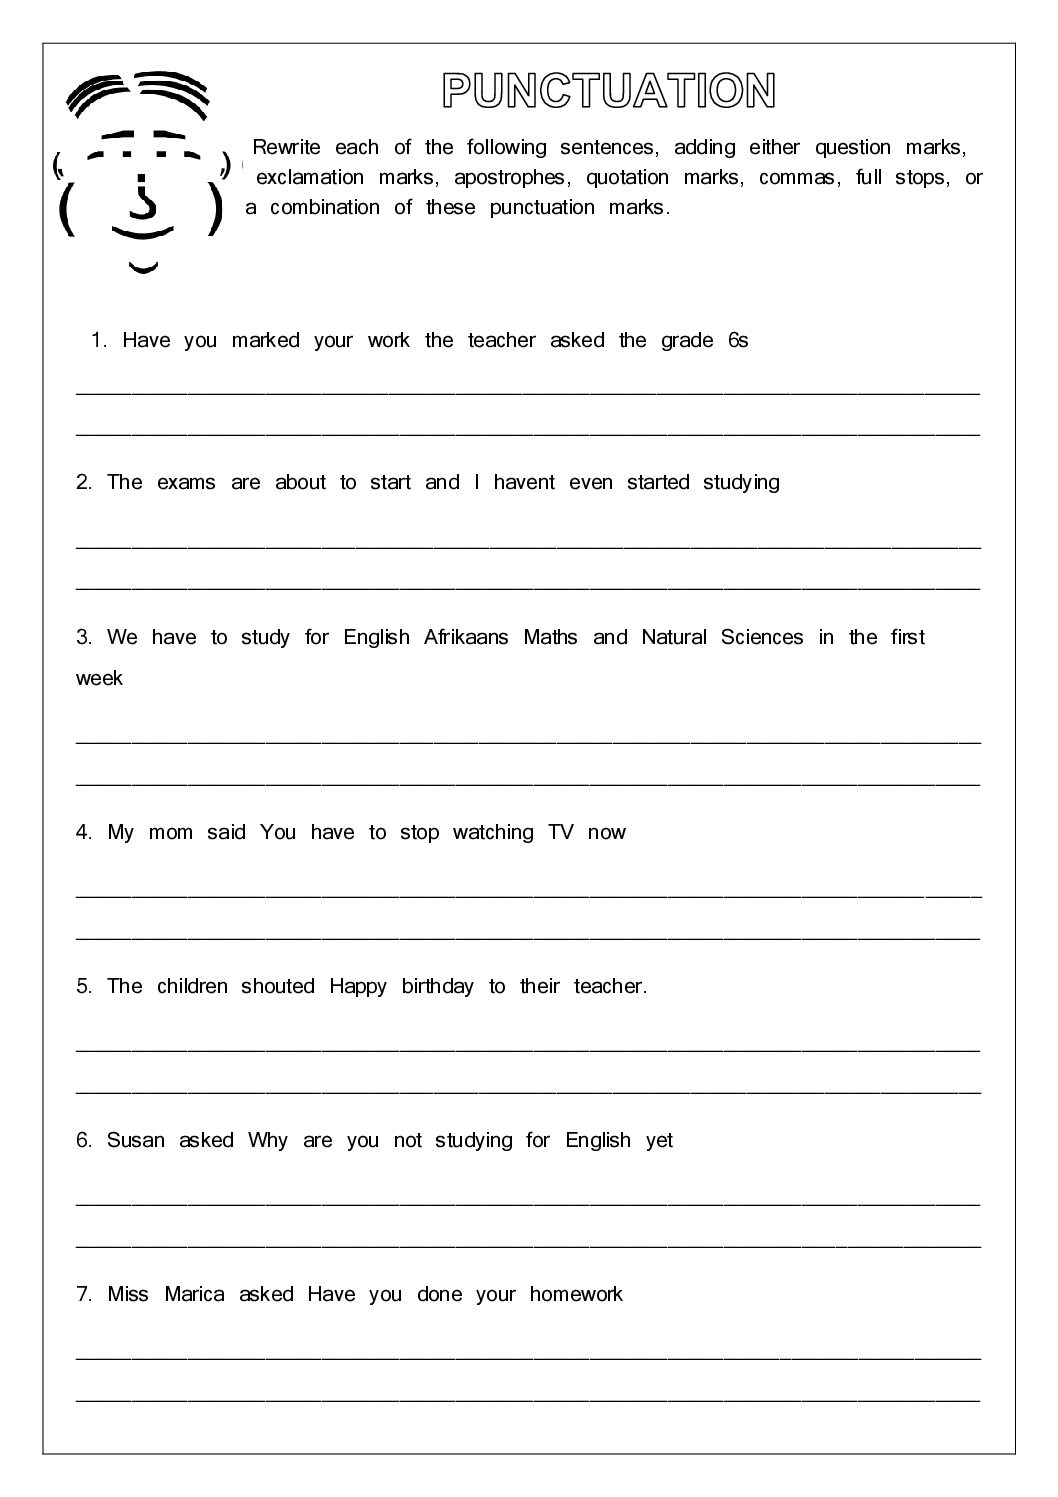 Punctuation Practice Worksheets